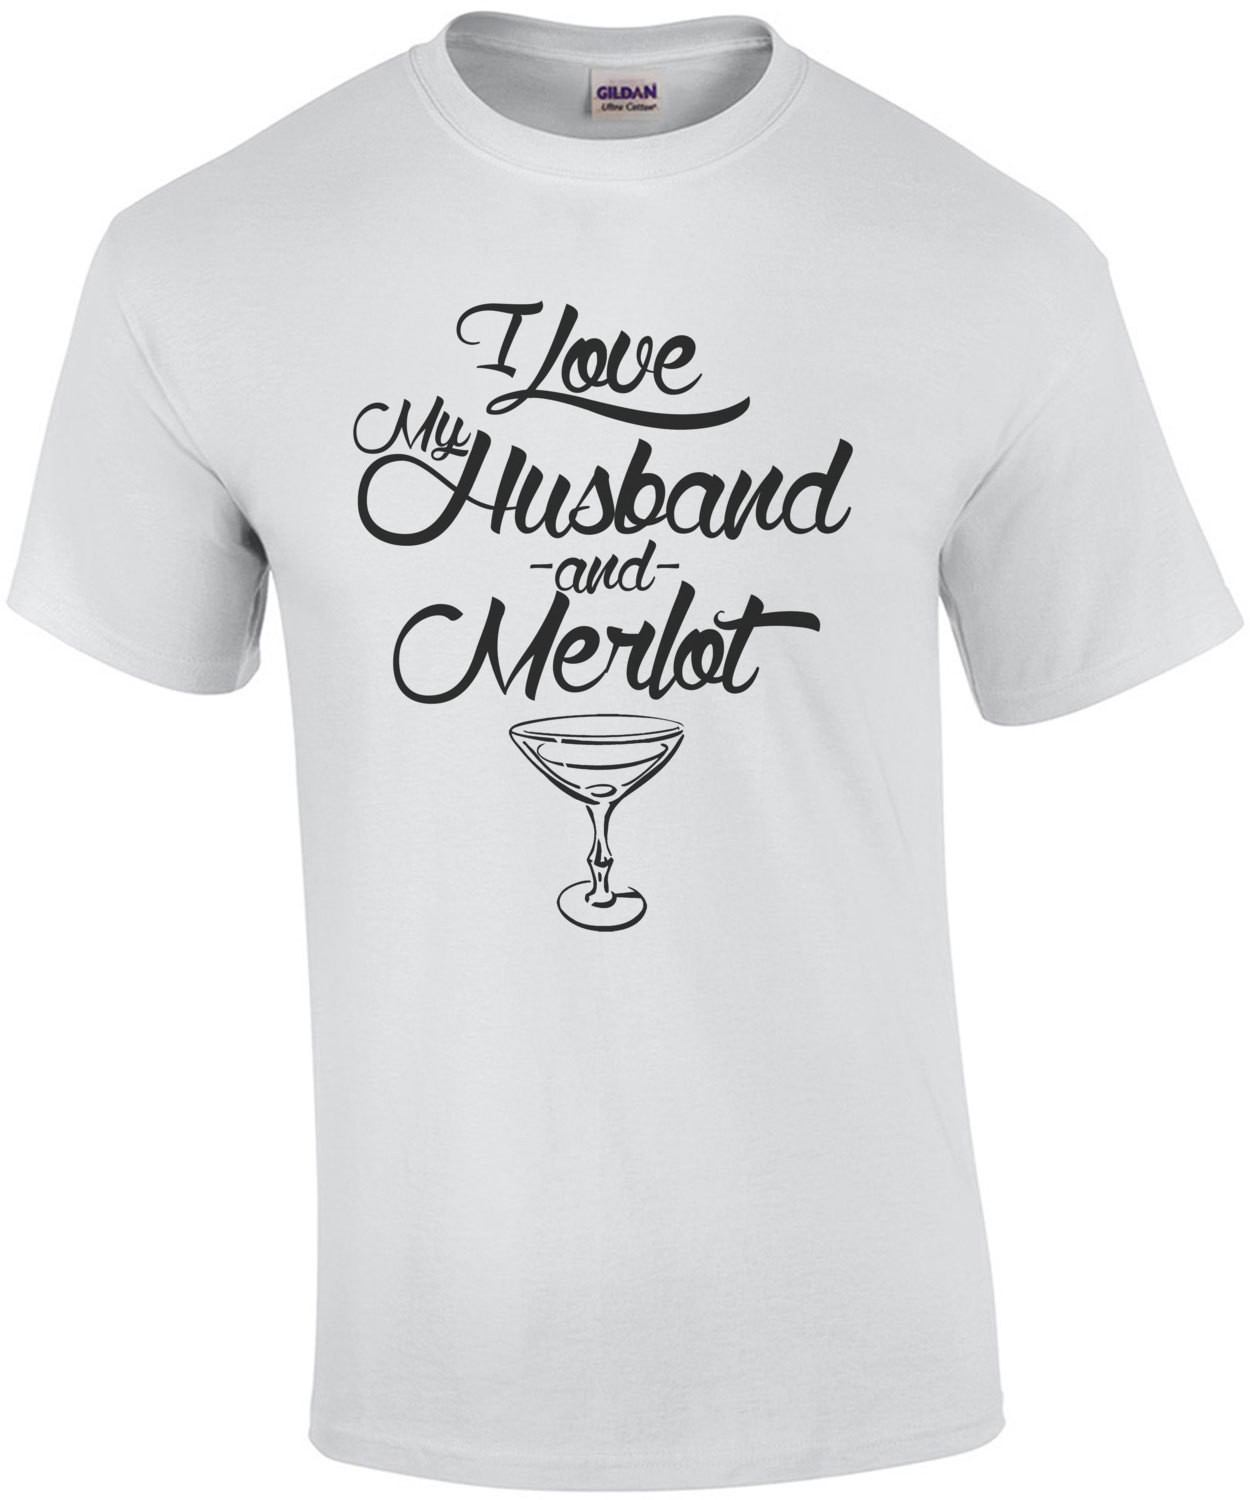 I Love My Husband And Merlot T-Shirt